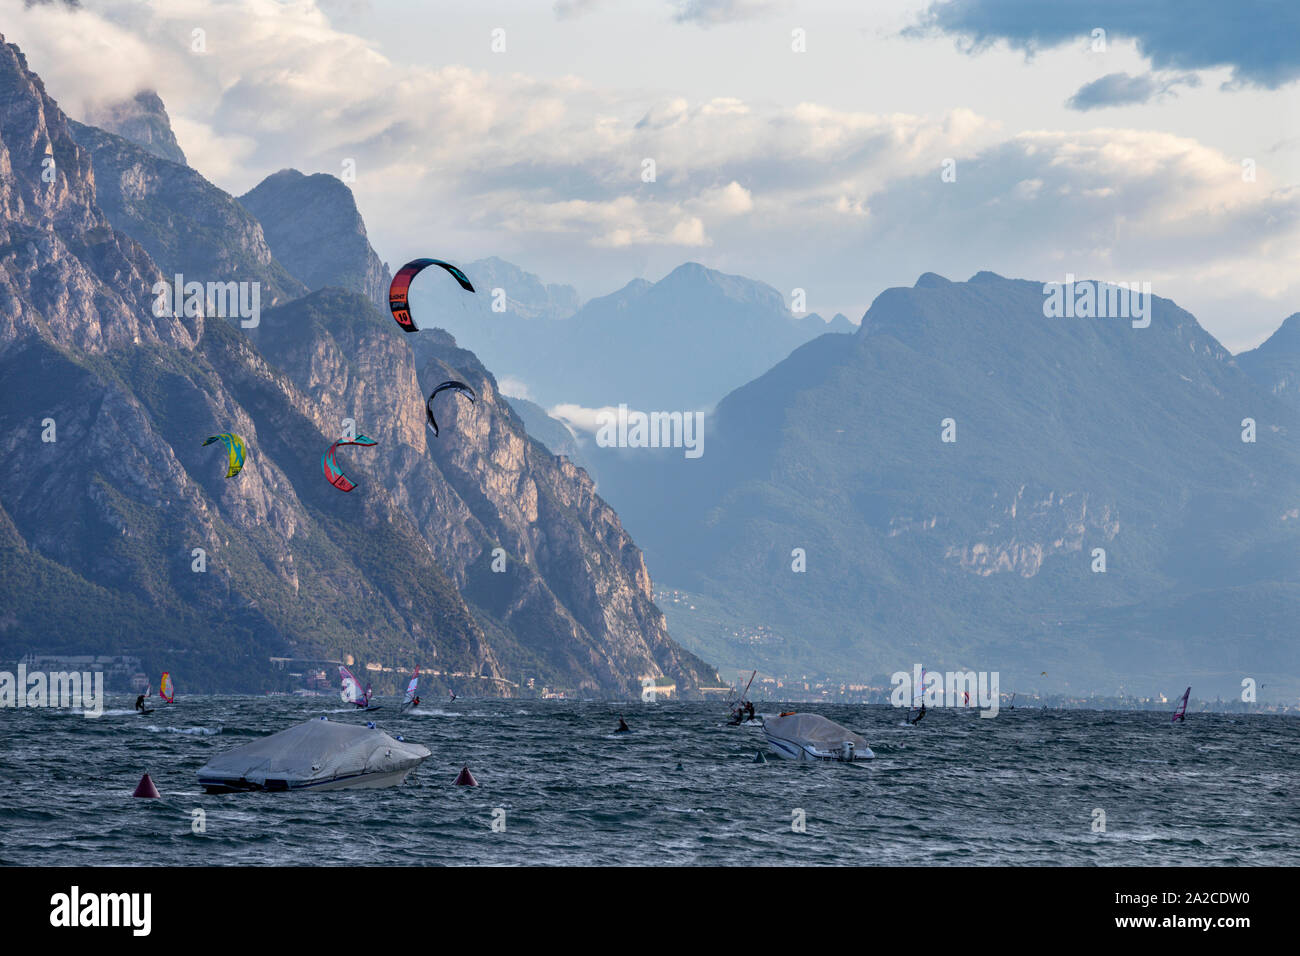 MALCESINE, ITALY - JUNE 13, 2019: The windsurfers on the Lago di Garda. Stock Photo